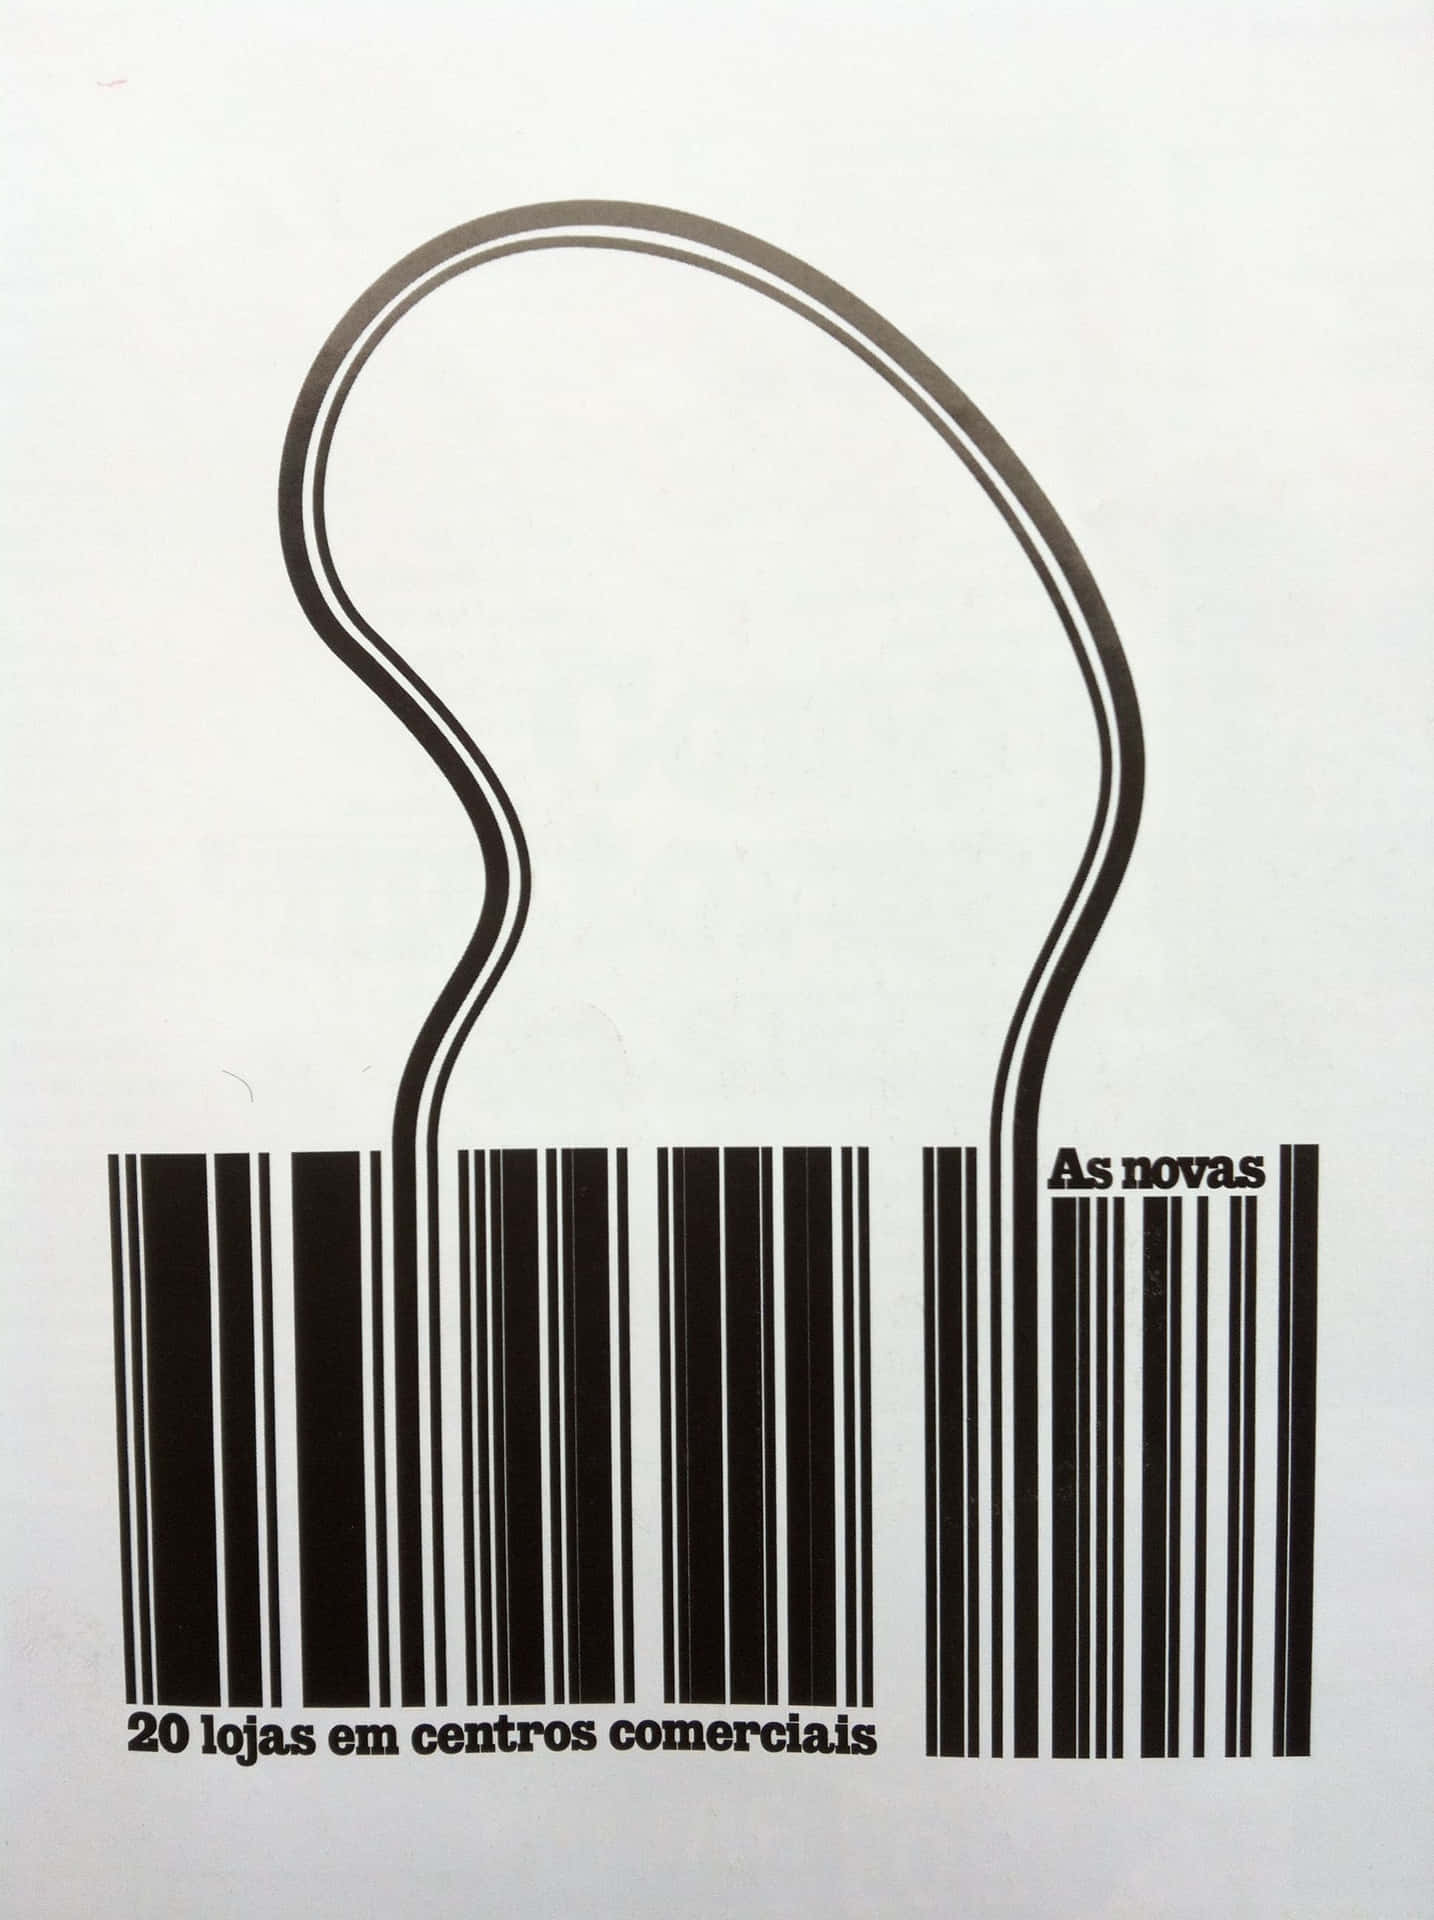 A modern barcode scanner in action Wallpaper